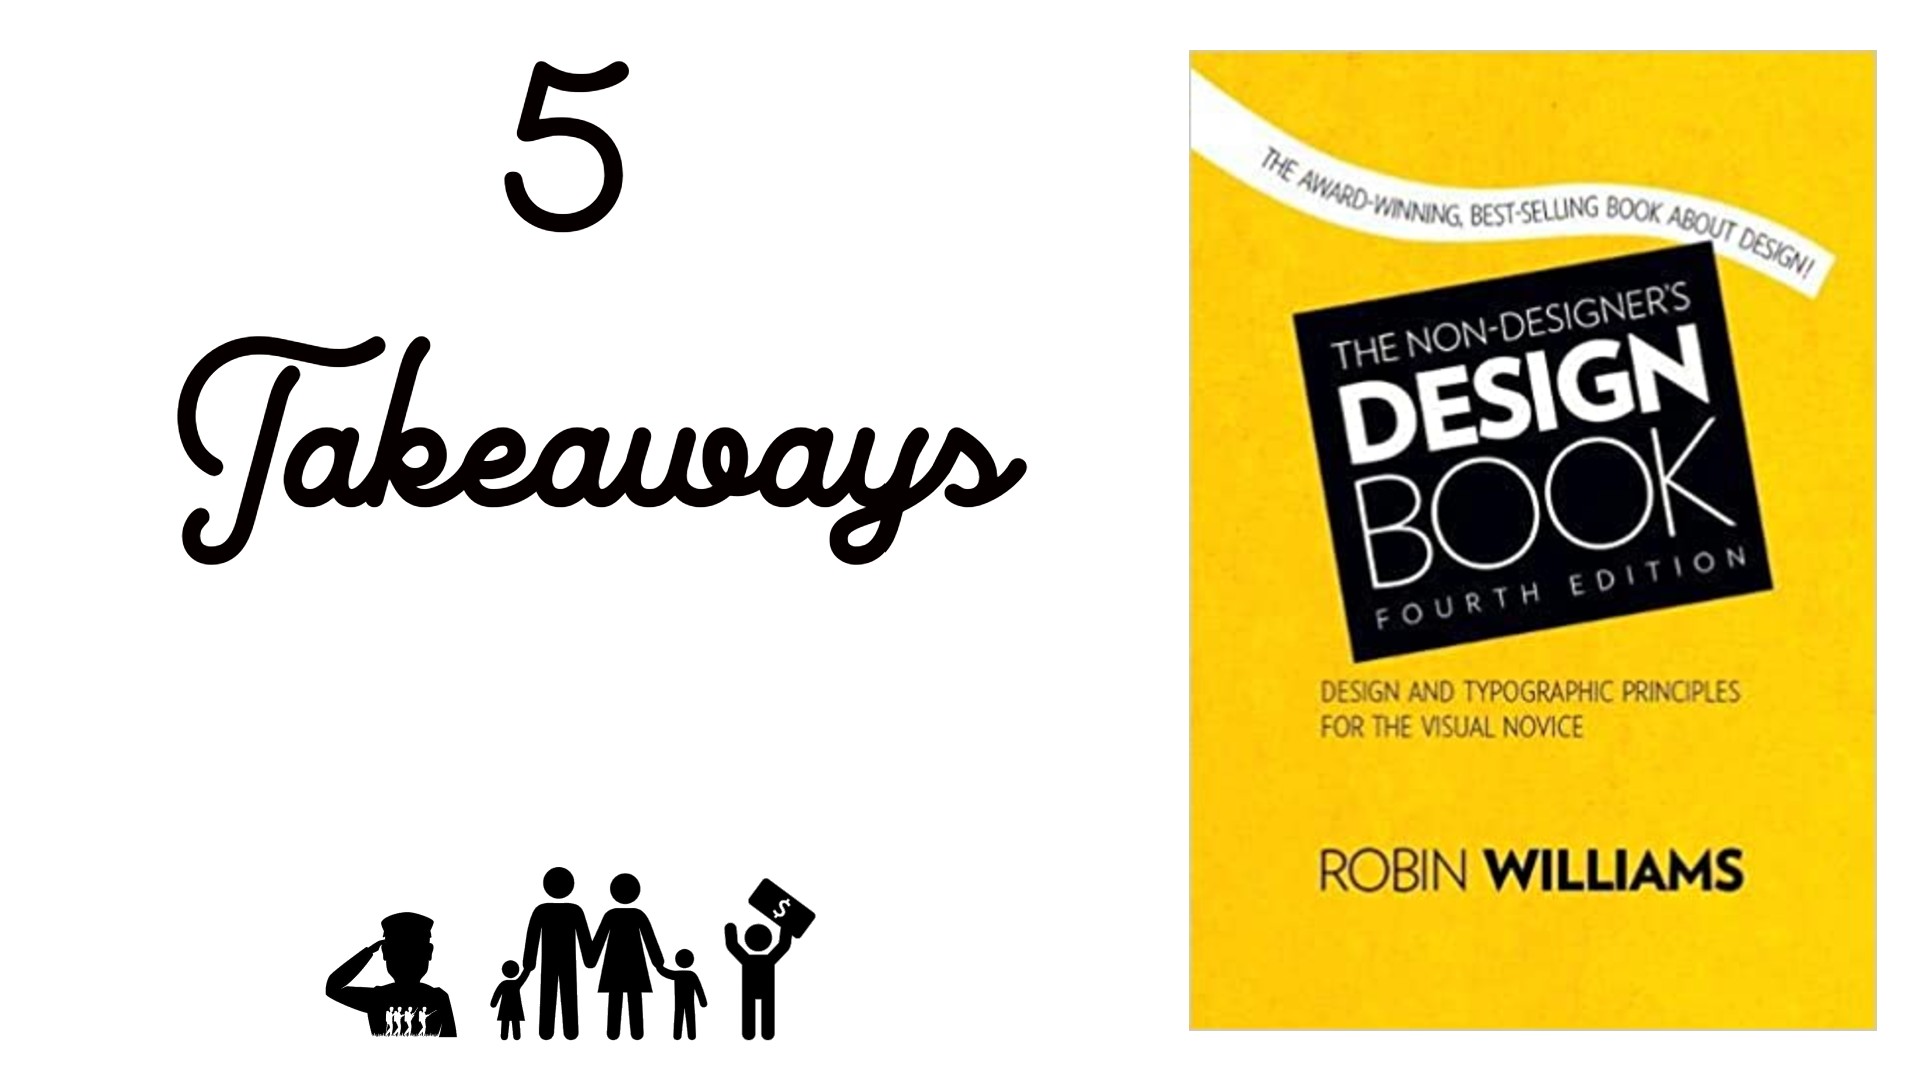 5 Takeaways from “The Non-Designer’s Design Book”